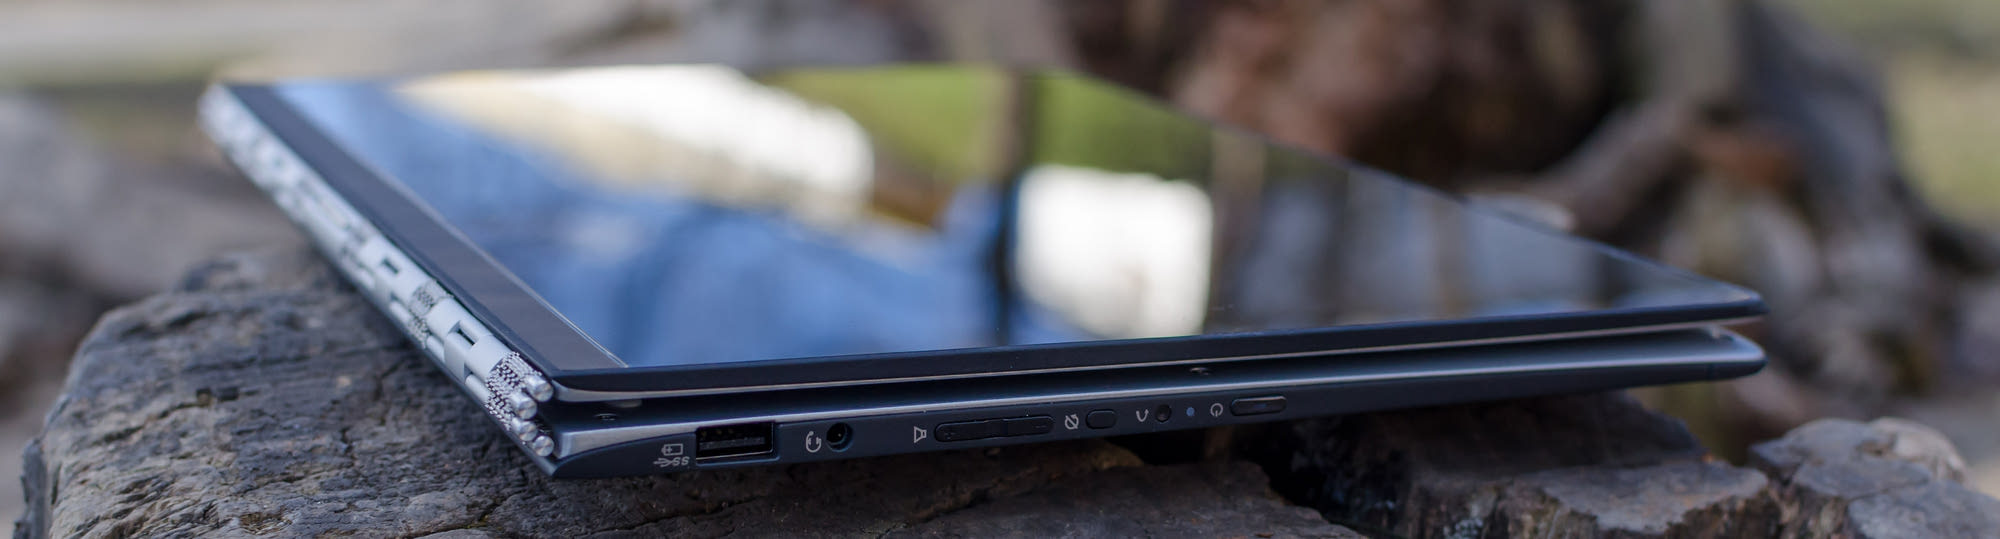 Lenovo Yoga 3 Pro review Ctrl blog